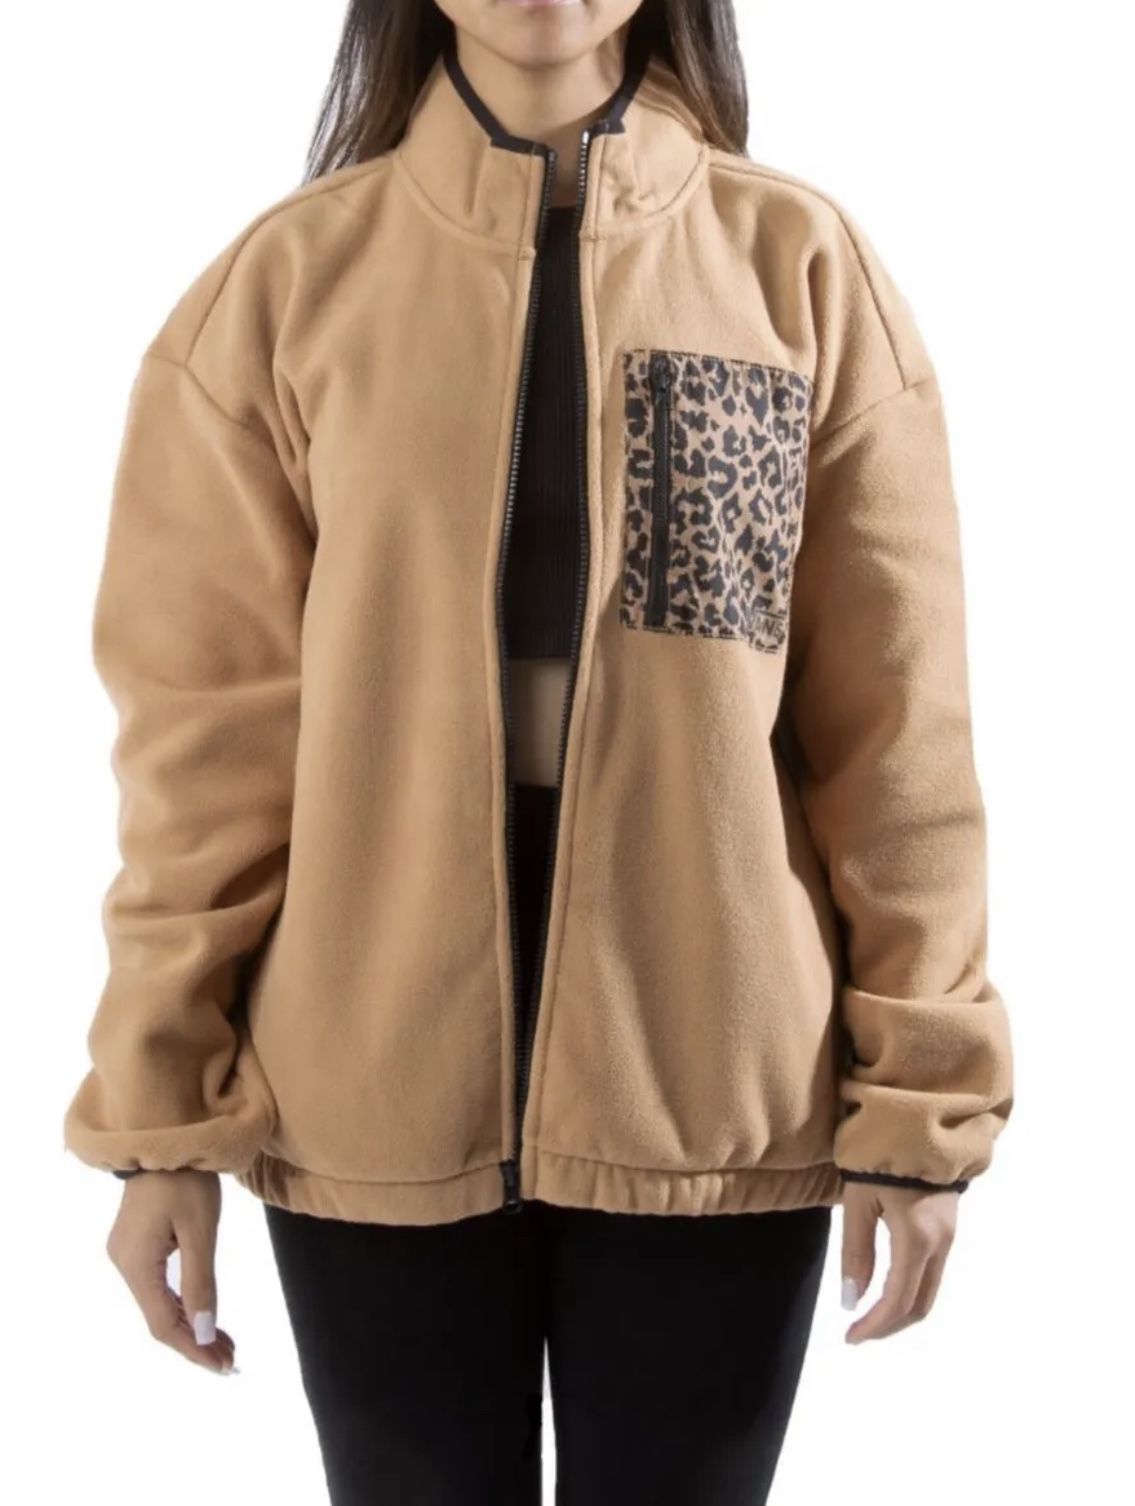 Vans Quinn Mock Zip Women’s Jacket Size Xtra Small NWT MSRP $88